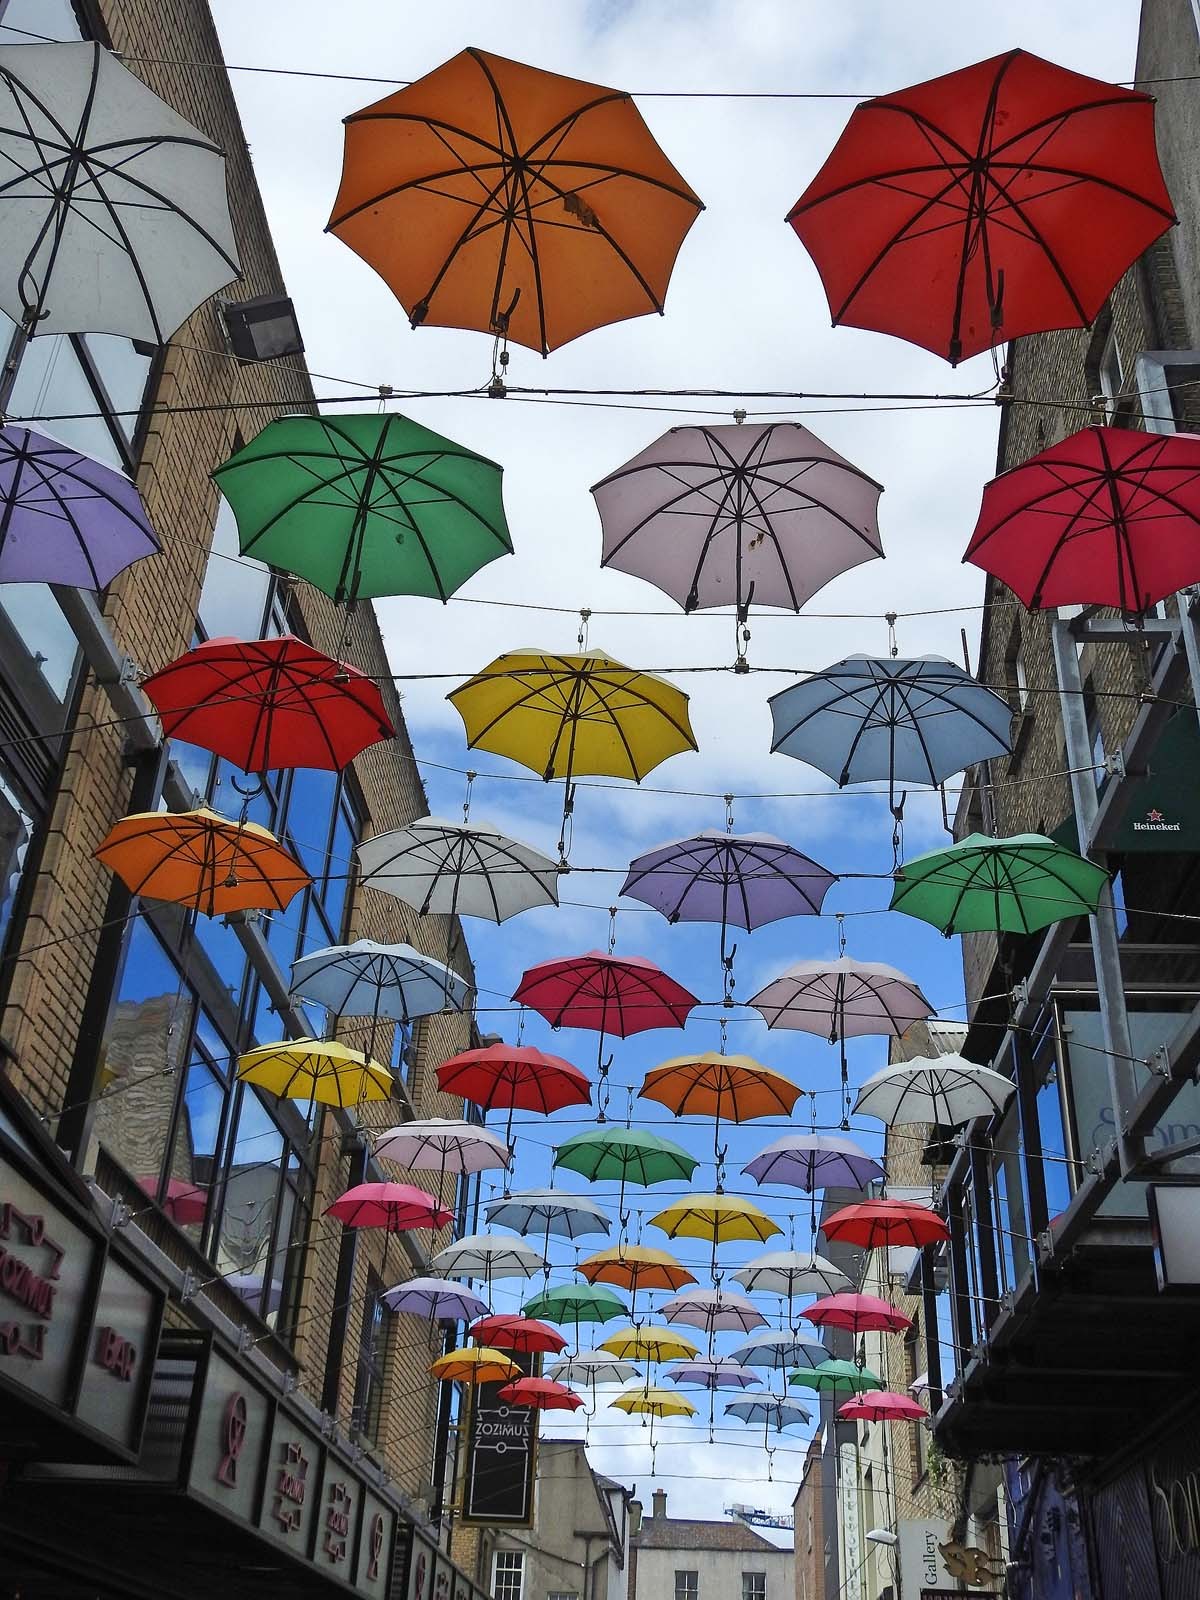 The Umbrellas on Anne’s Lane